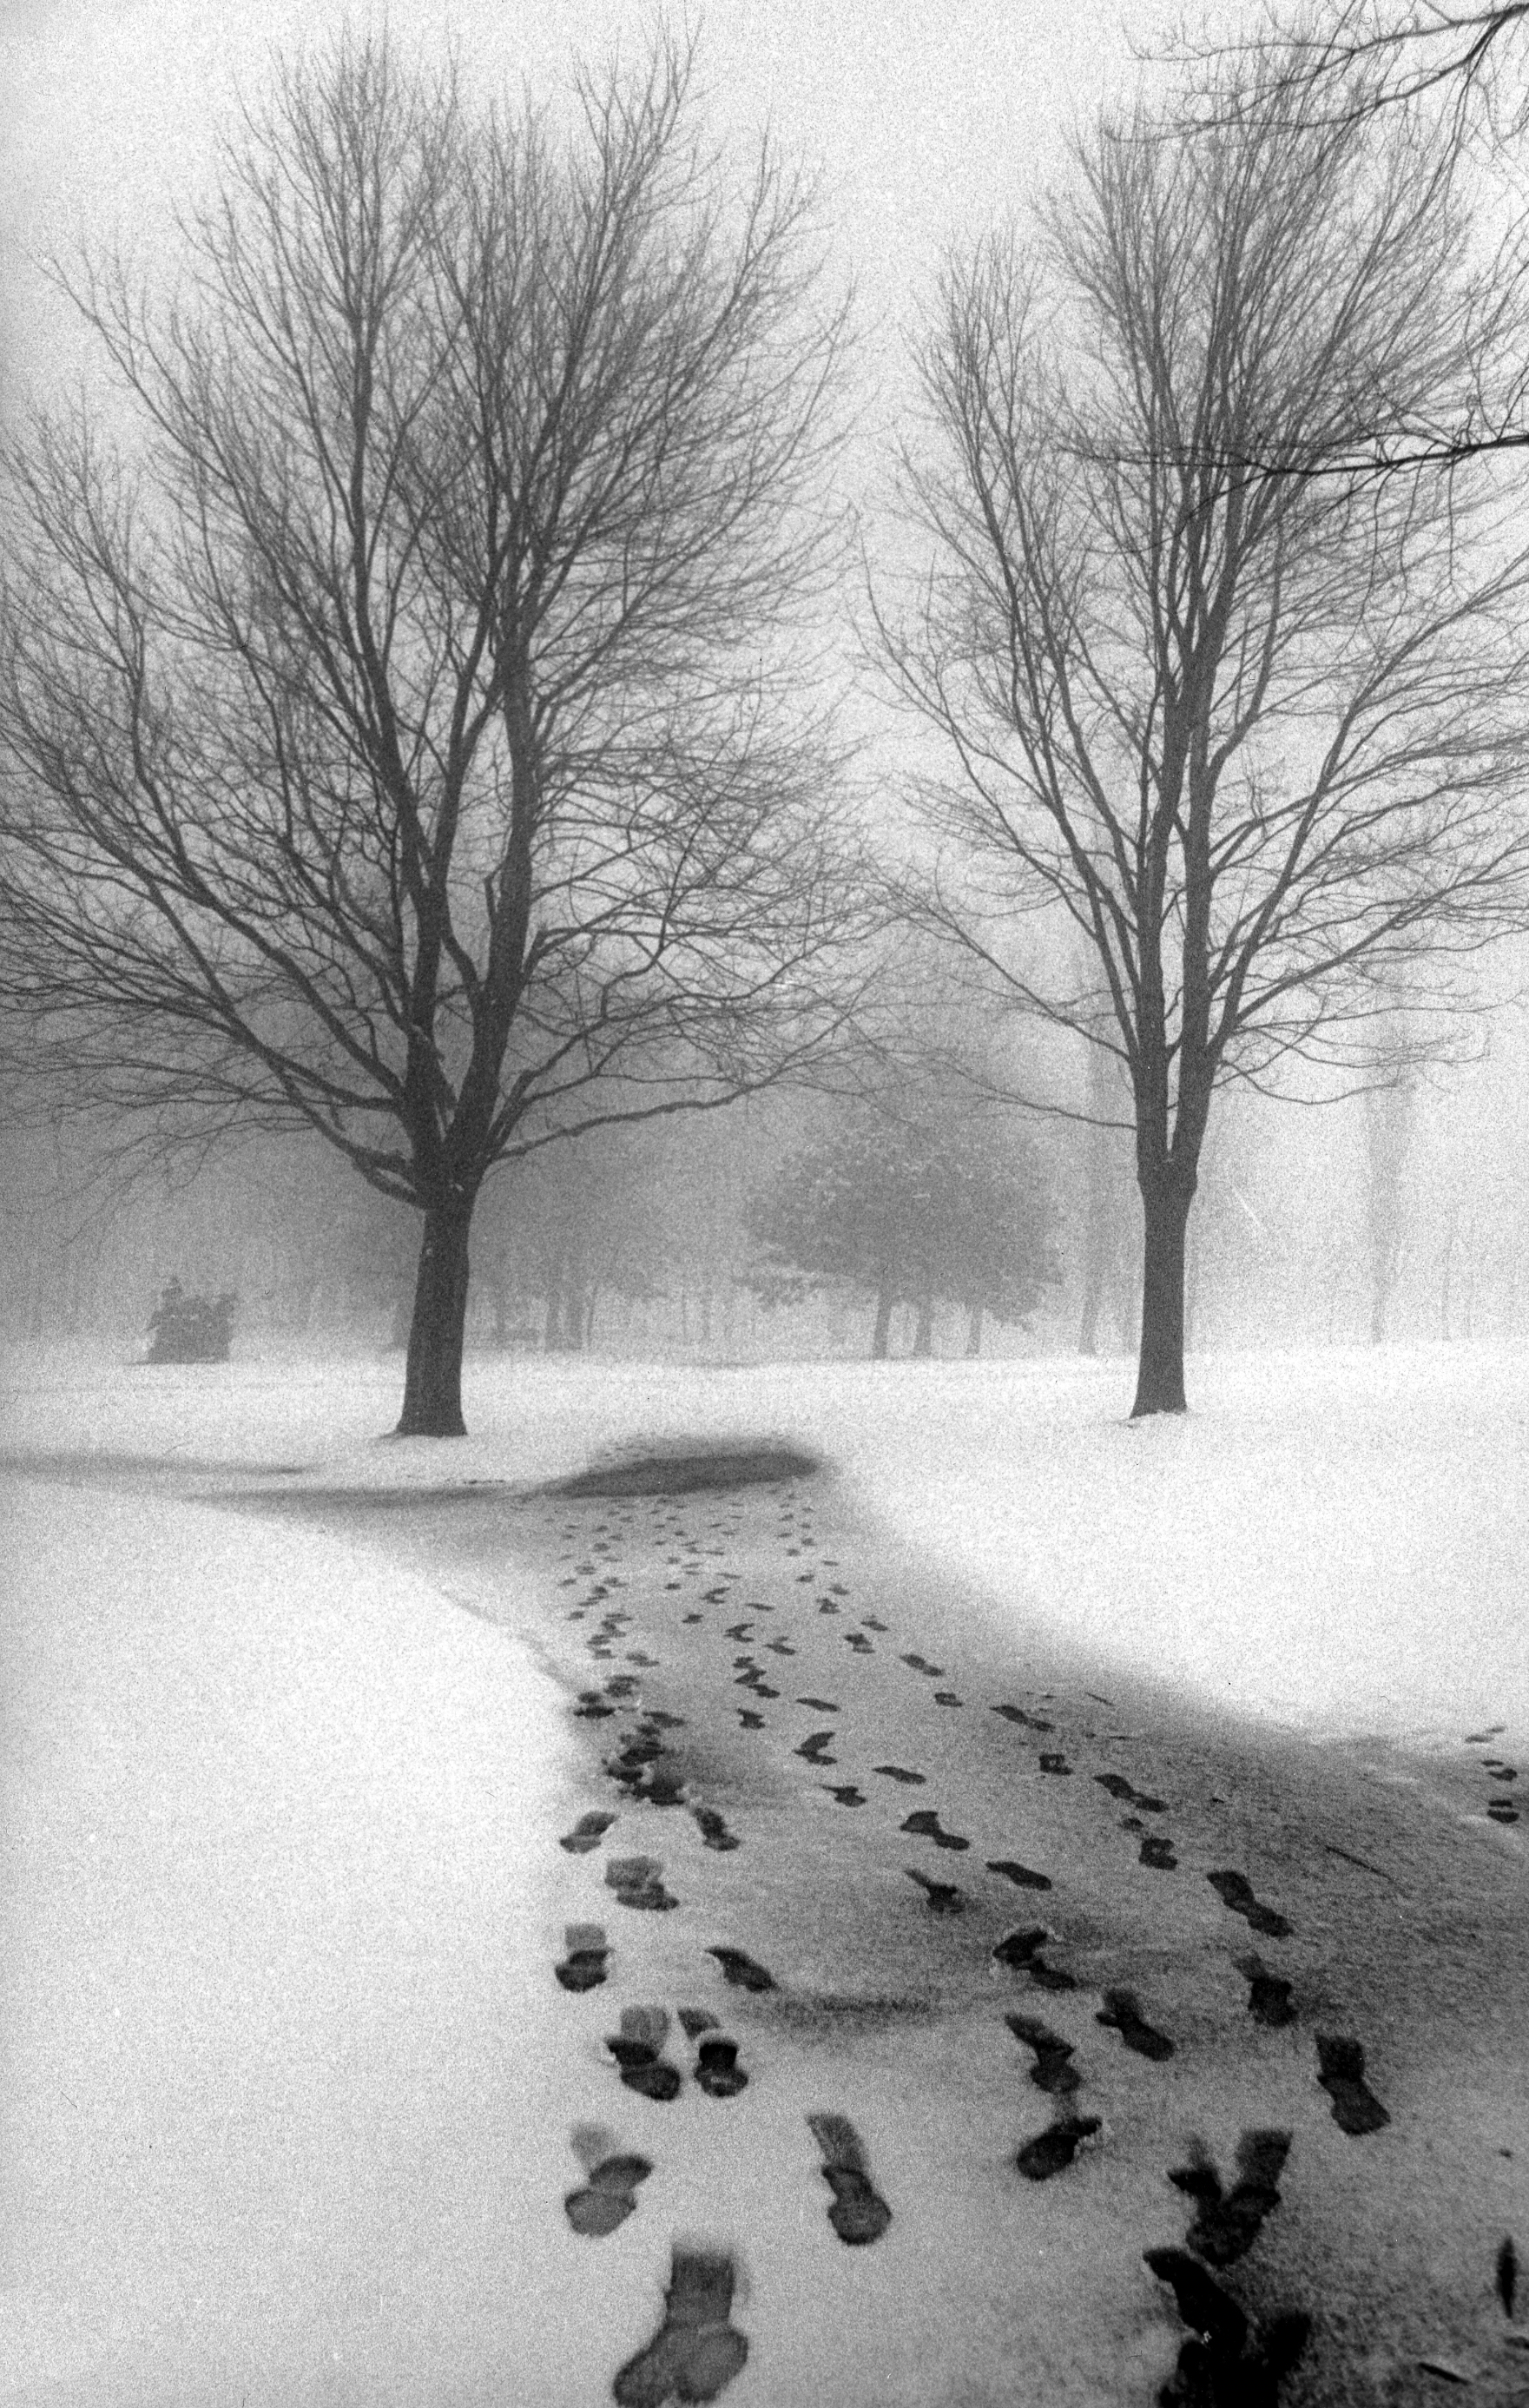   Footprints in Snow | Empreintes dans la neige  